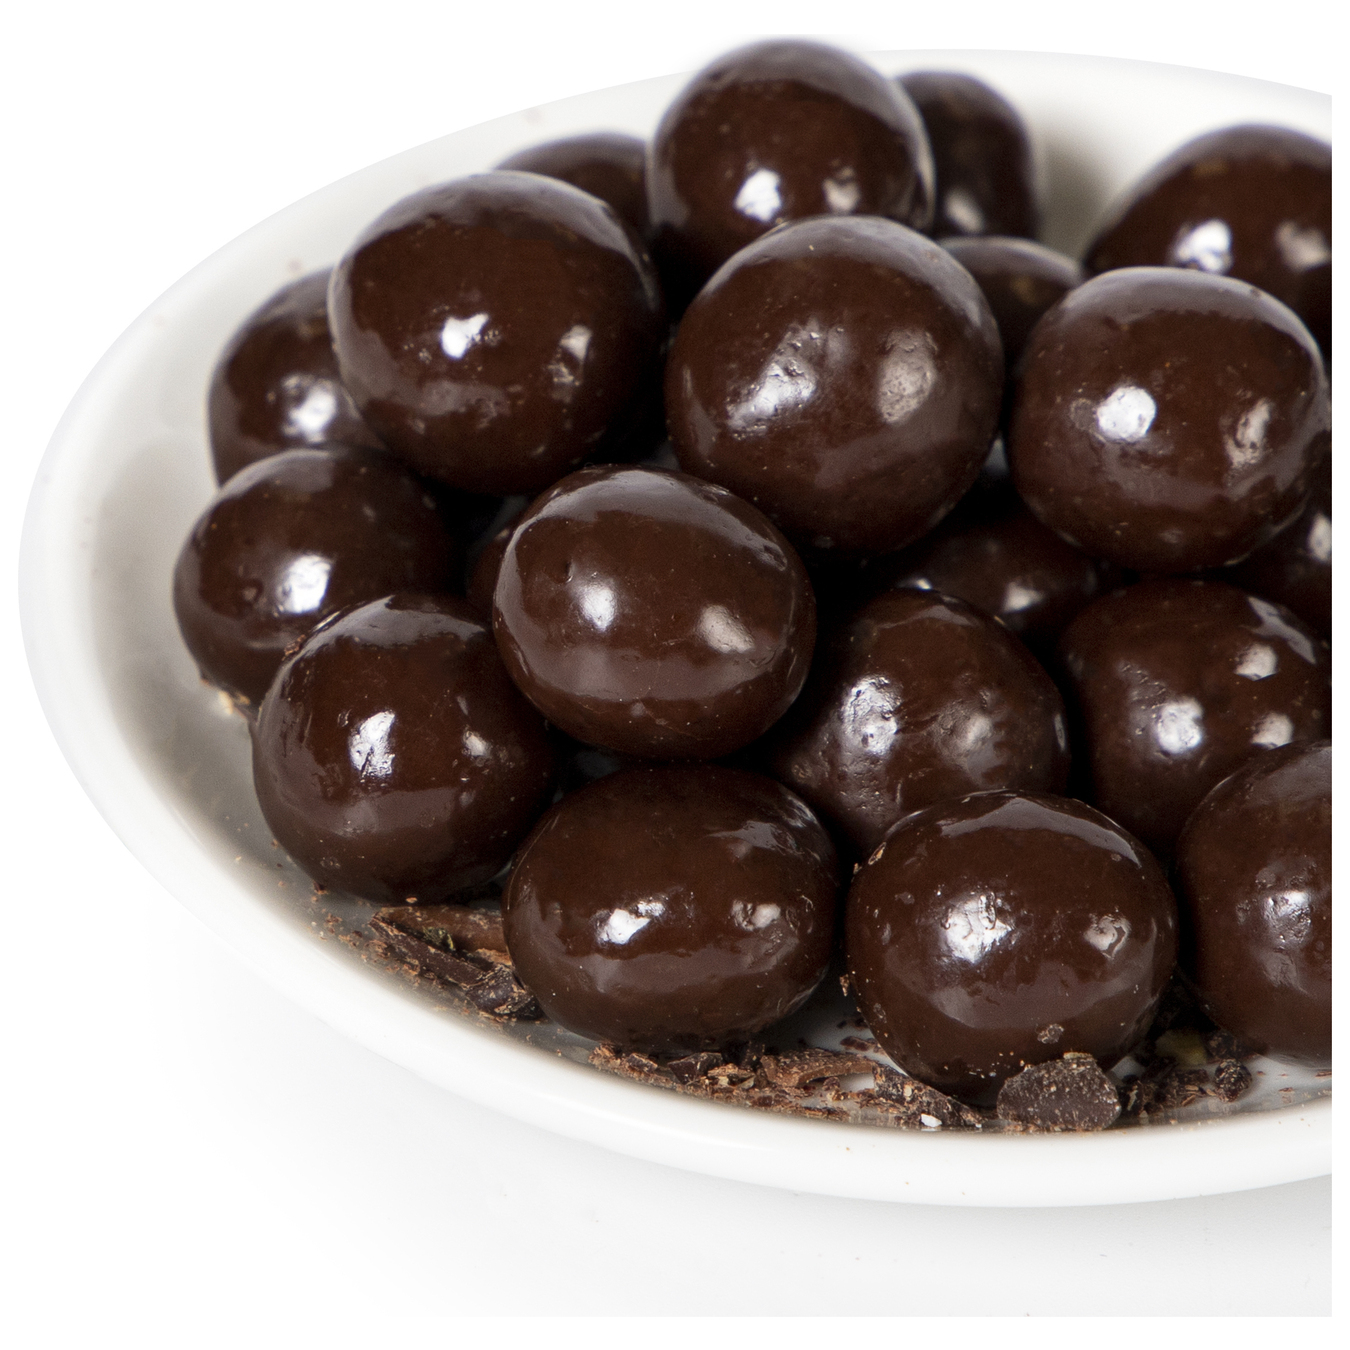 Hazelnuts in dark chocolate